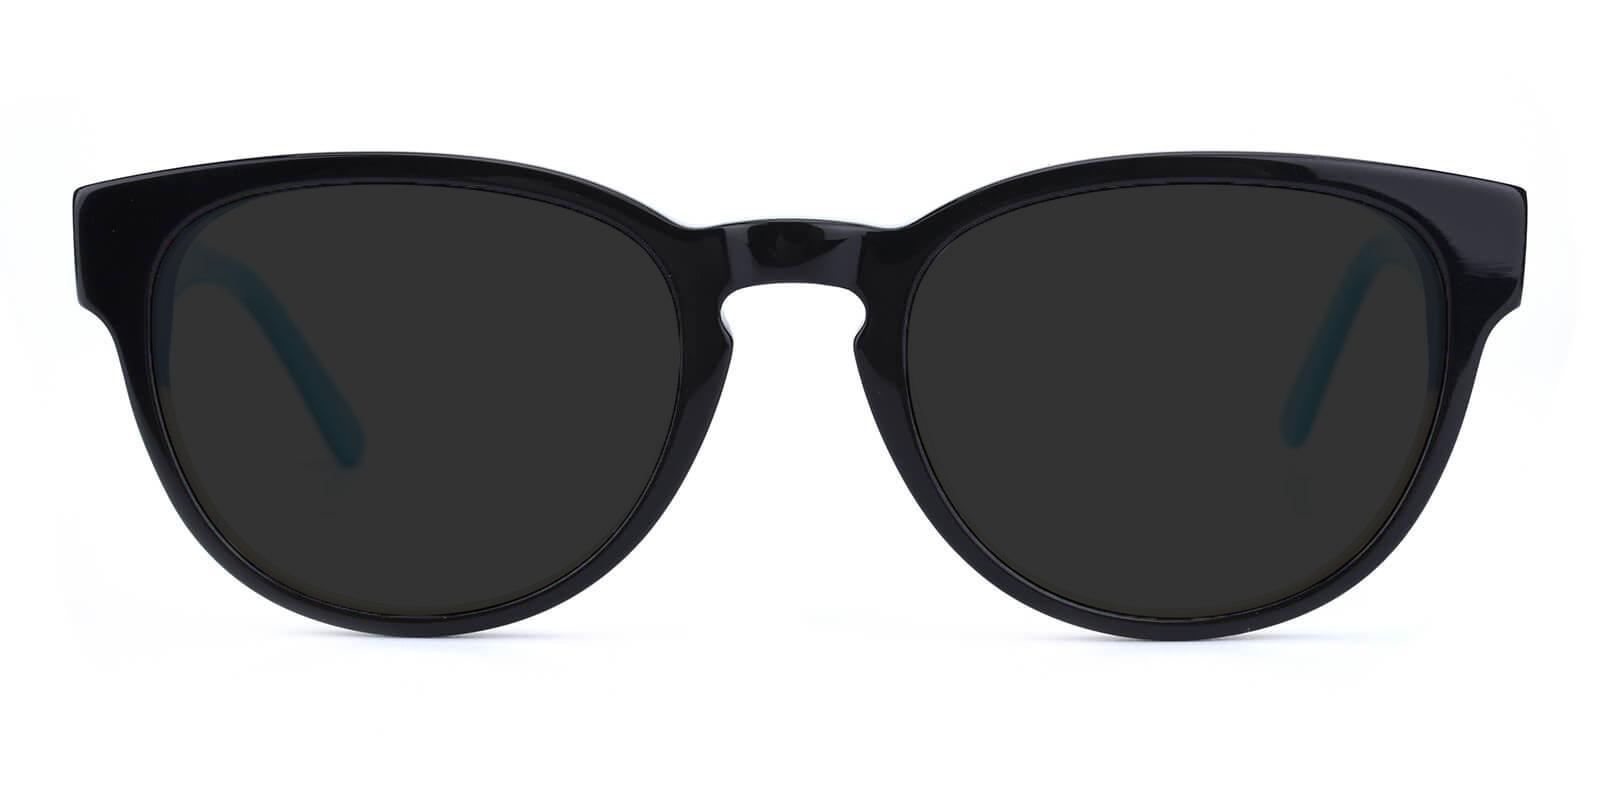 Wistful Blue Acetate SpringHinges , Sunglasses , UniversalBridgeFit Frames from ABBE Glasses